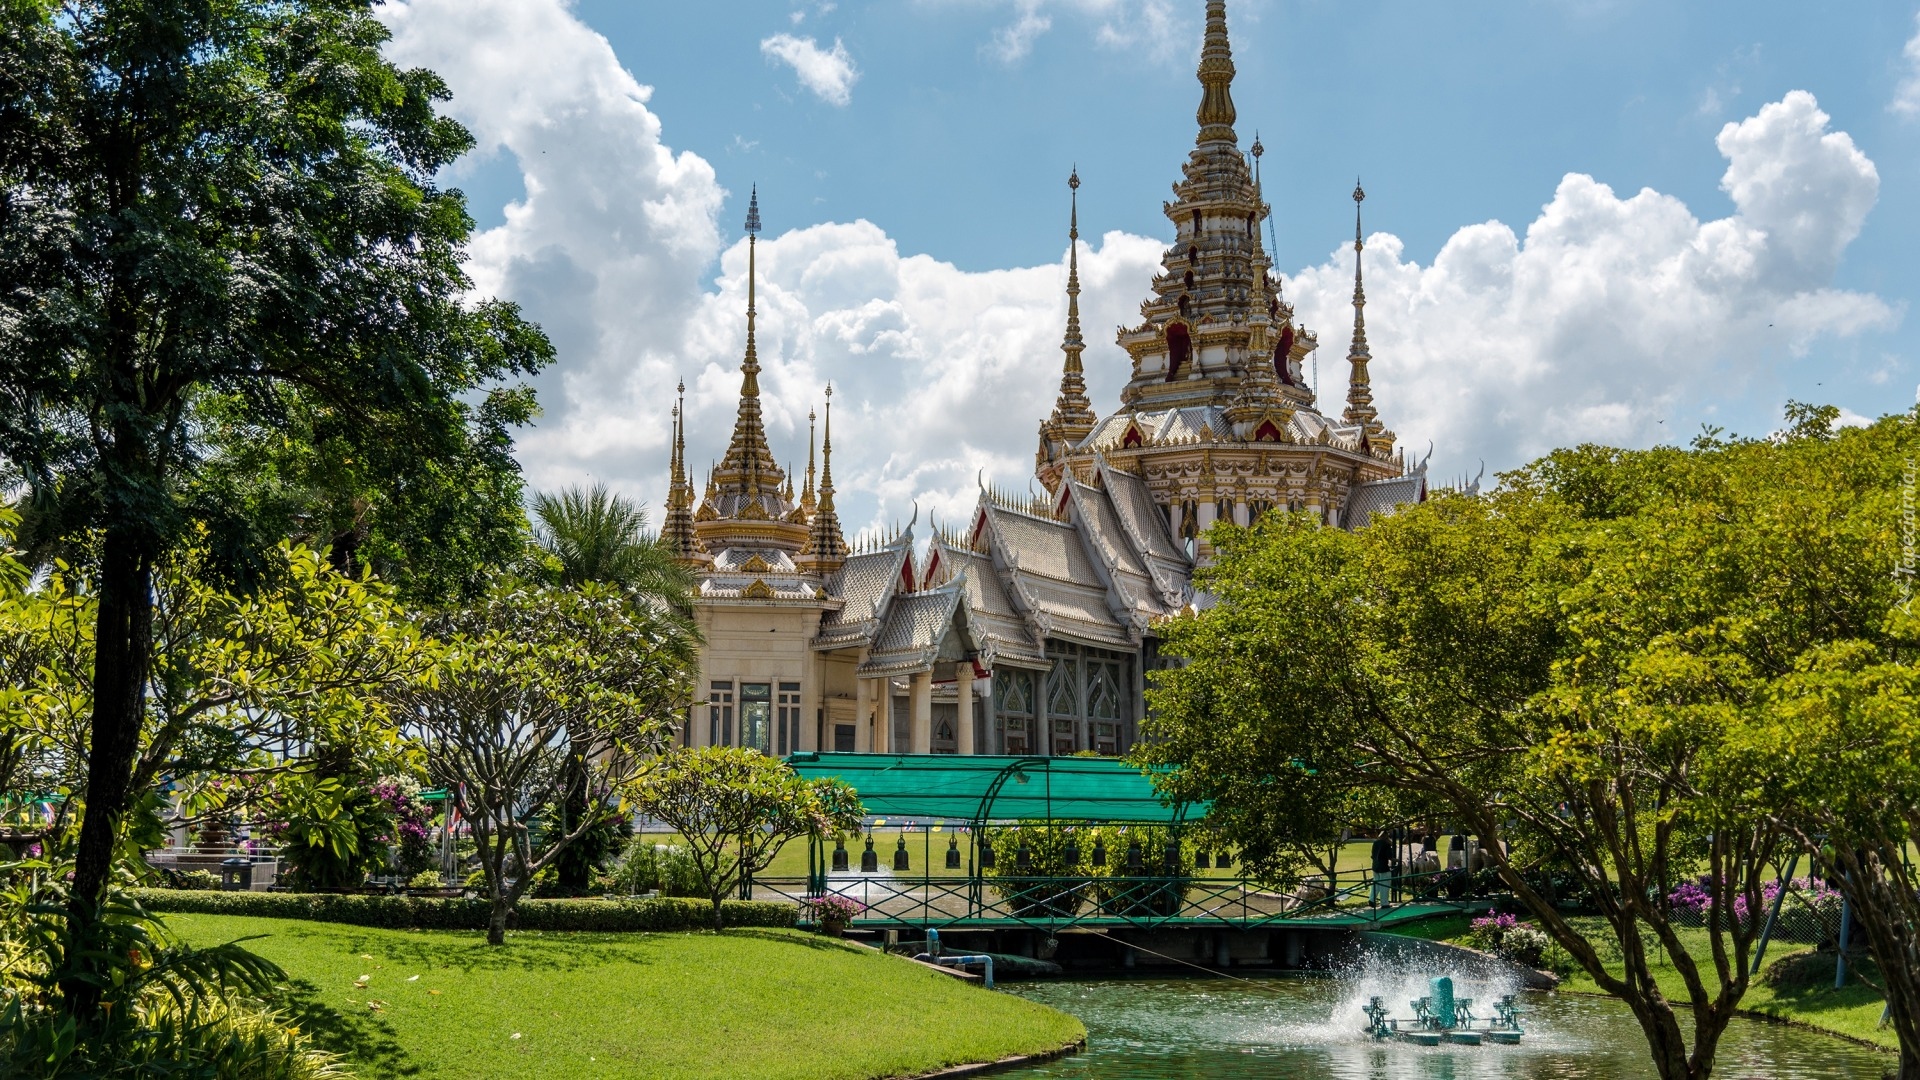 Świątynia Mahawiharn Temple, Prowincja Nakhon Ratchasima, Tajlandia, Drzewa